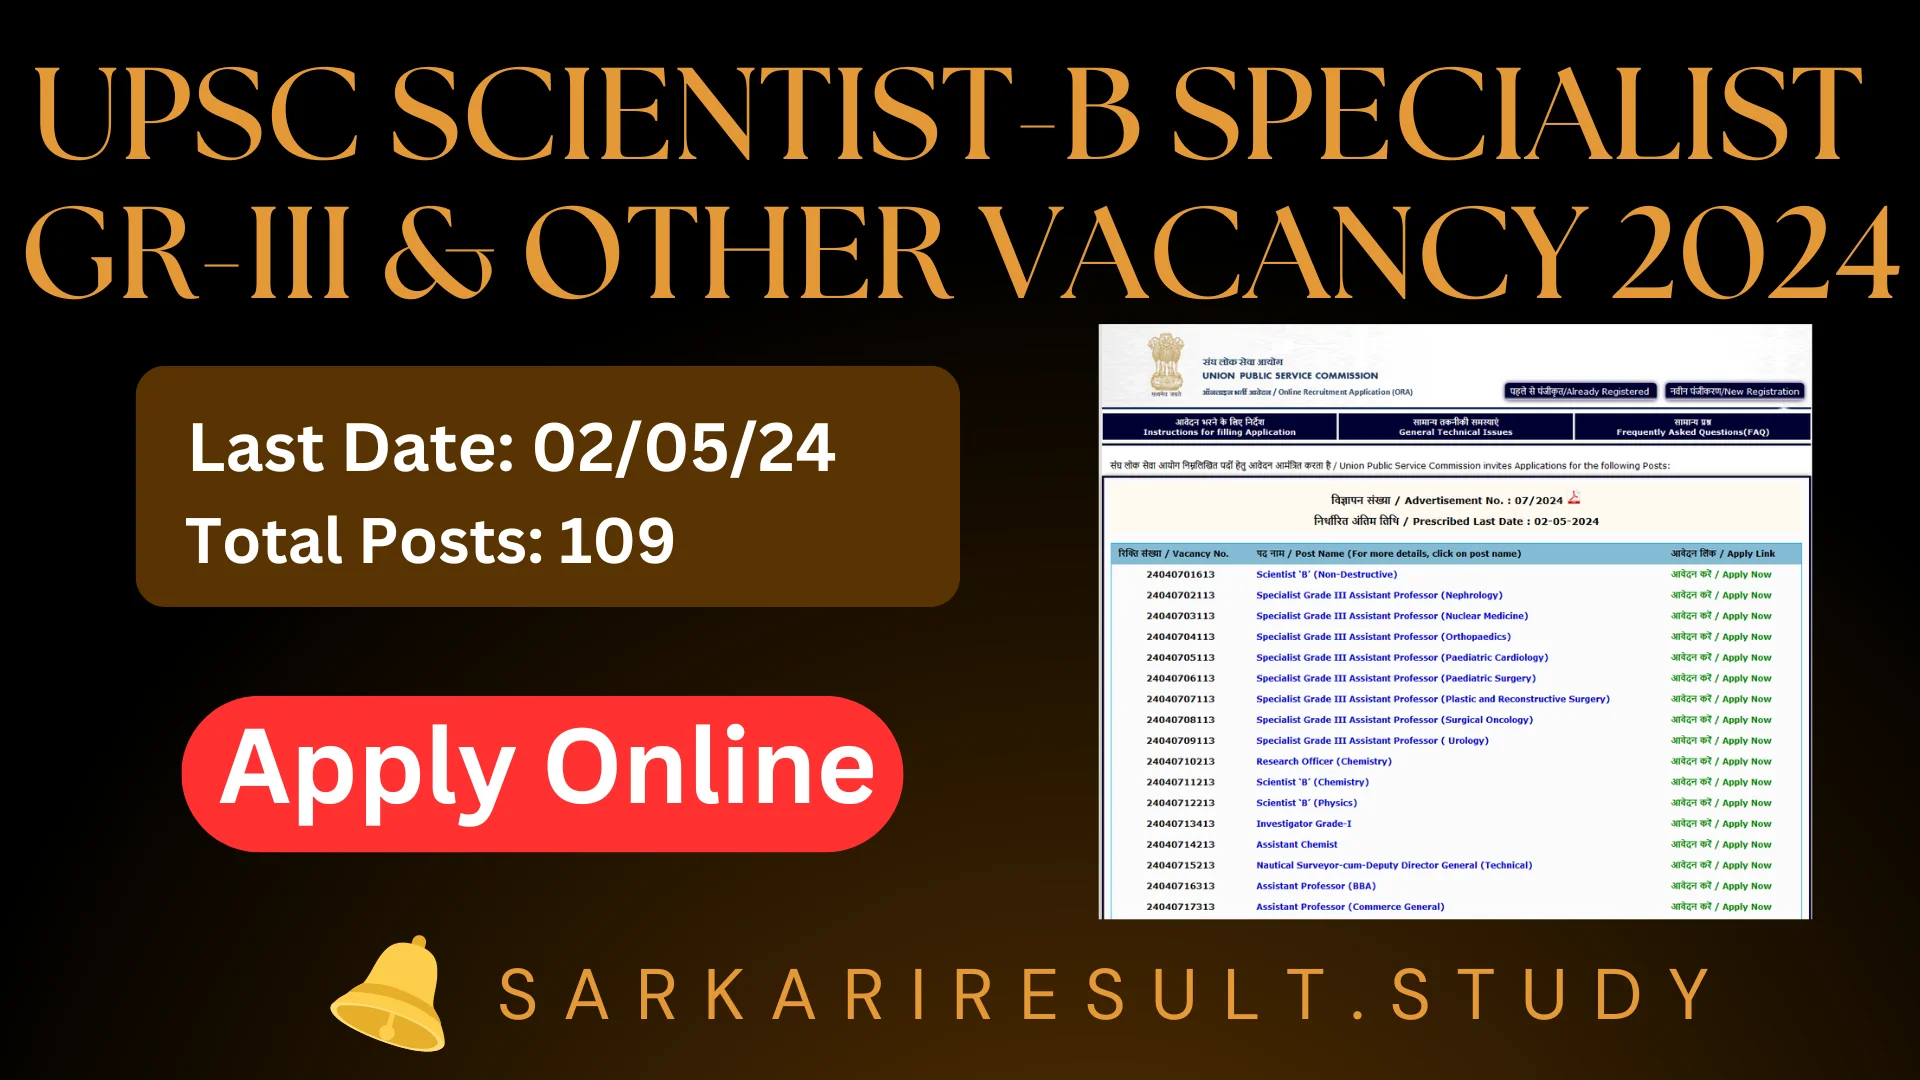 UPSC Scientist-B Specialist Gr-III & Other Vacancy 2024